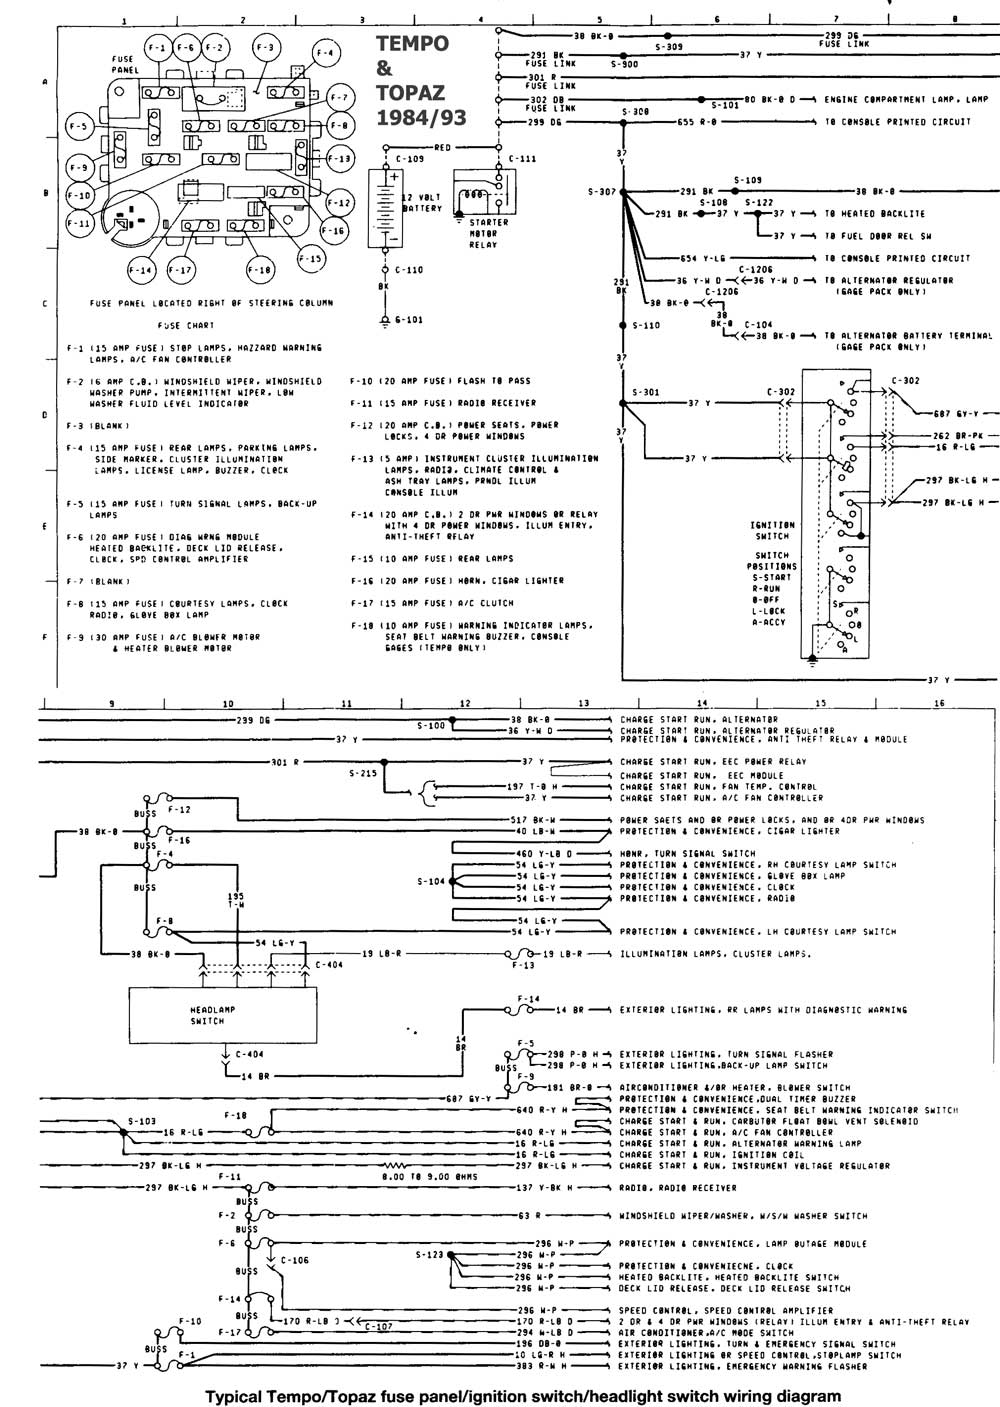 1993 Ford taurus owners manual pdf